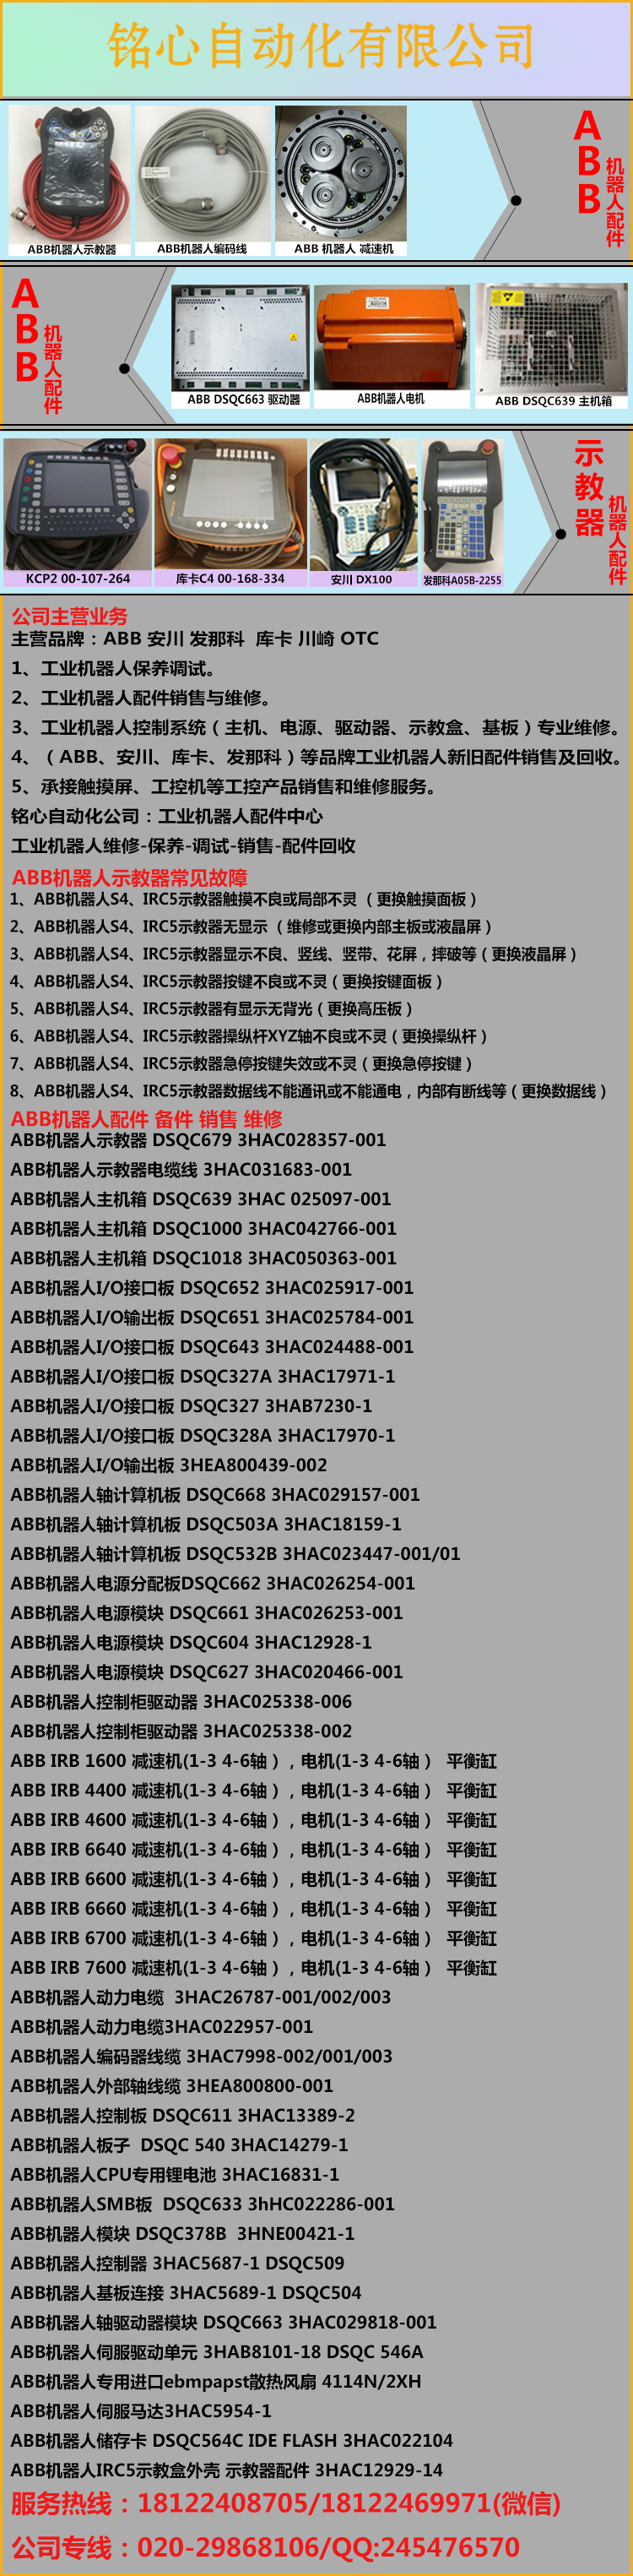 ABB机器人电源 DSQC661 3HAC026253-001 现货 维修 3HAC026253-001,DSQC661,ABB机器人,电源